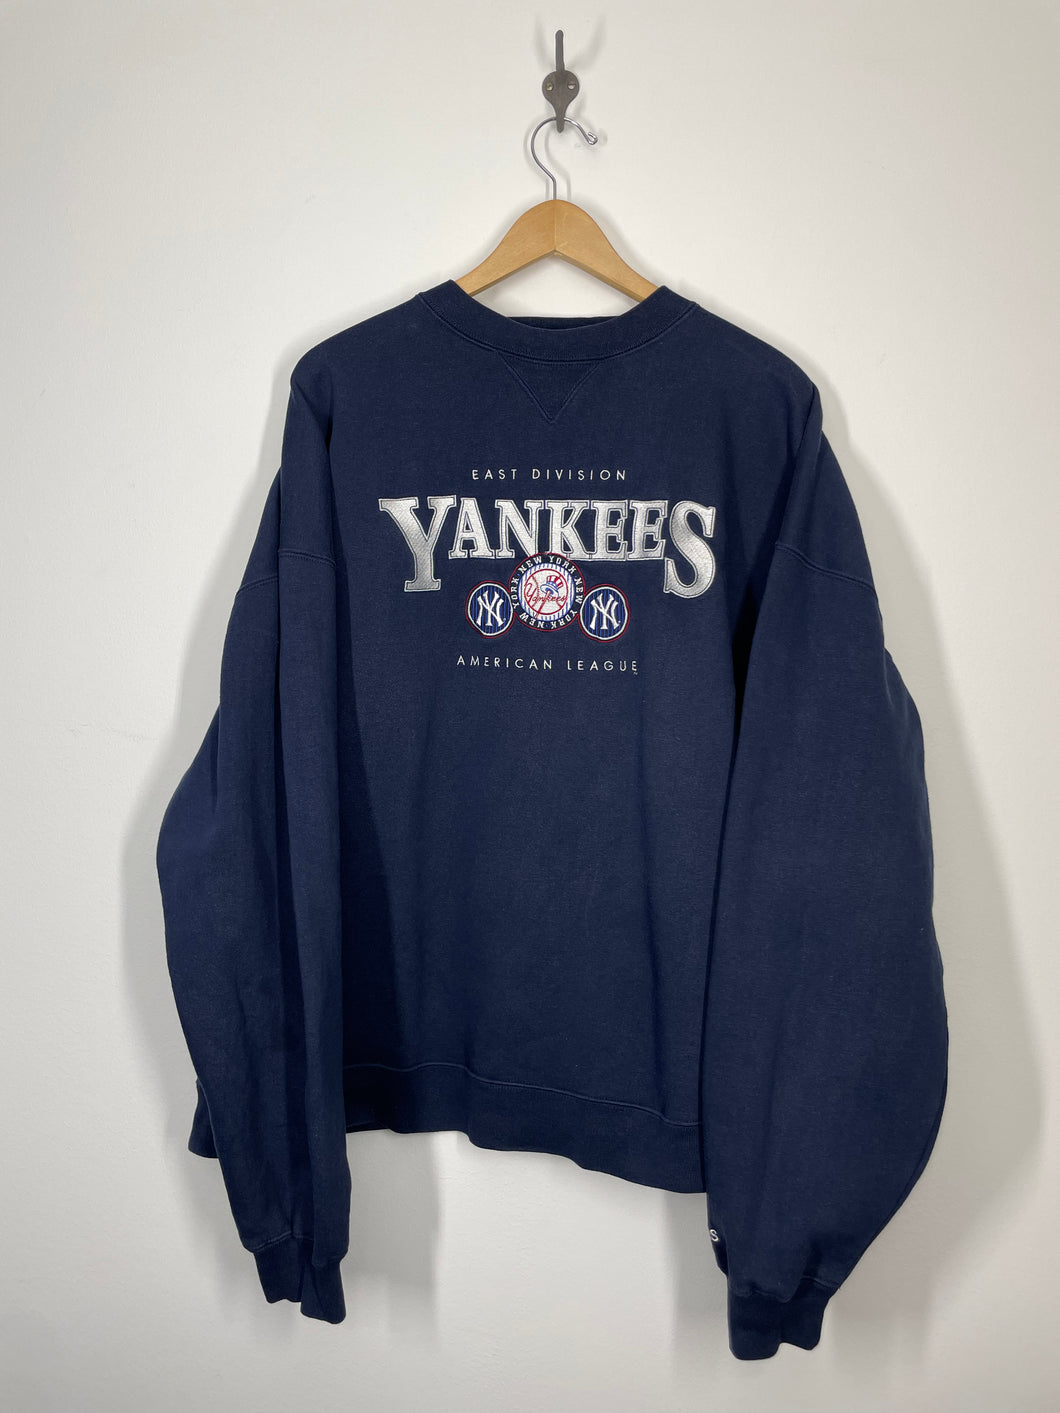 Shirts, Vintage Yankees Sweatshirt